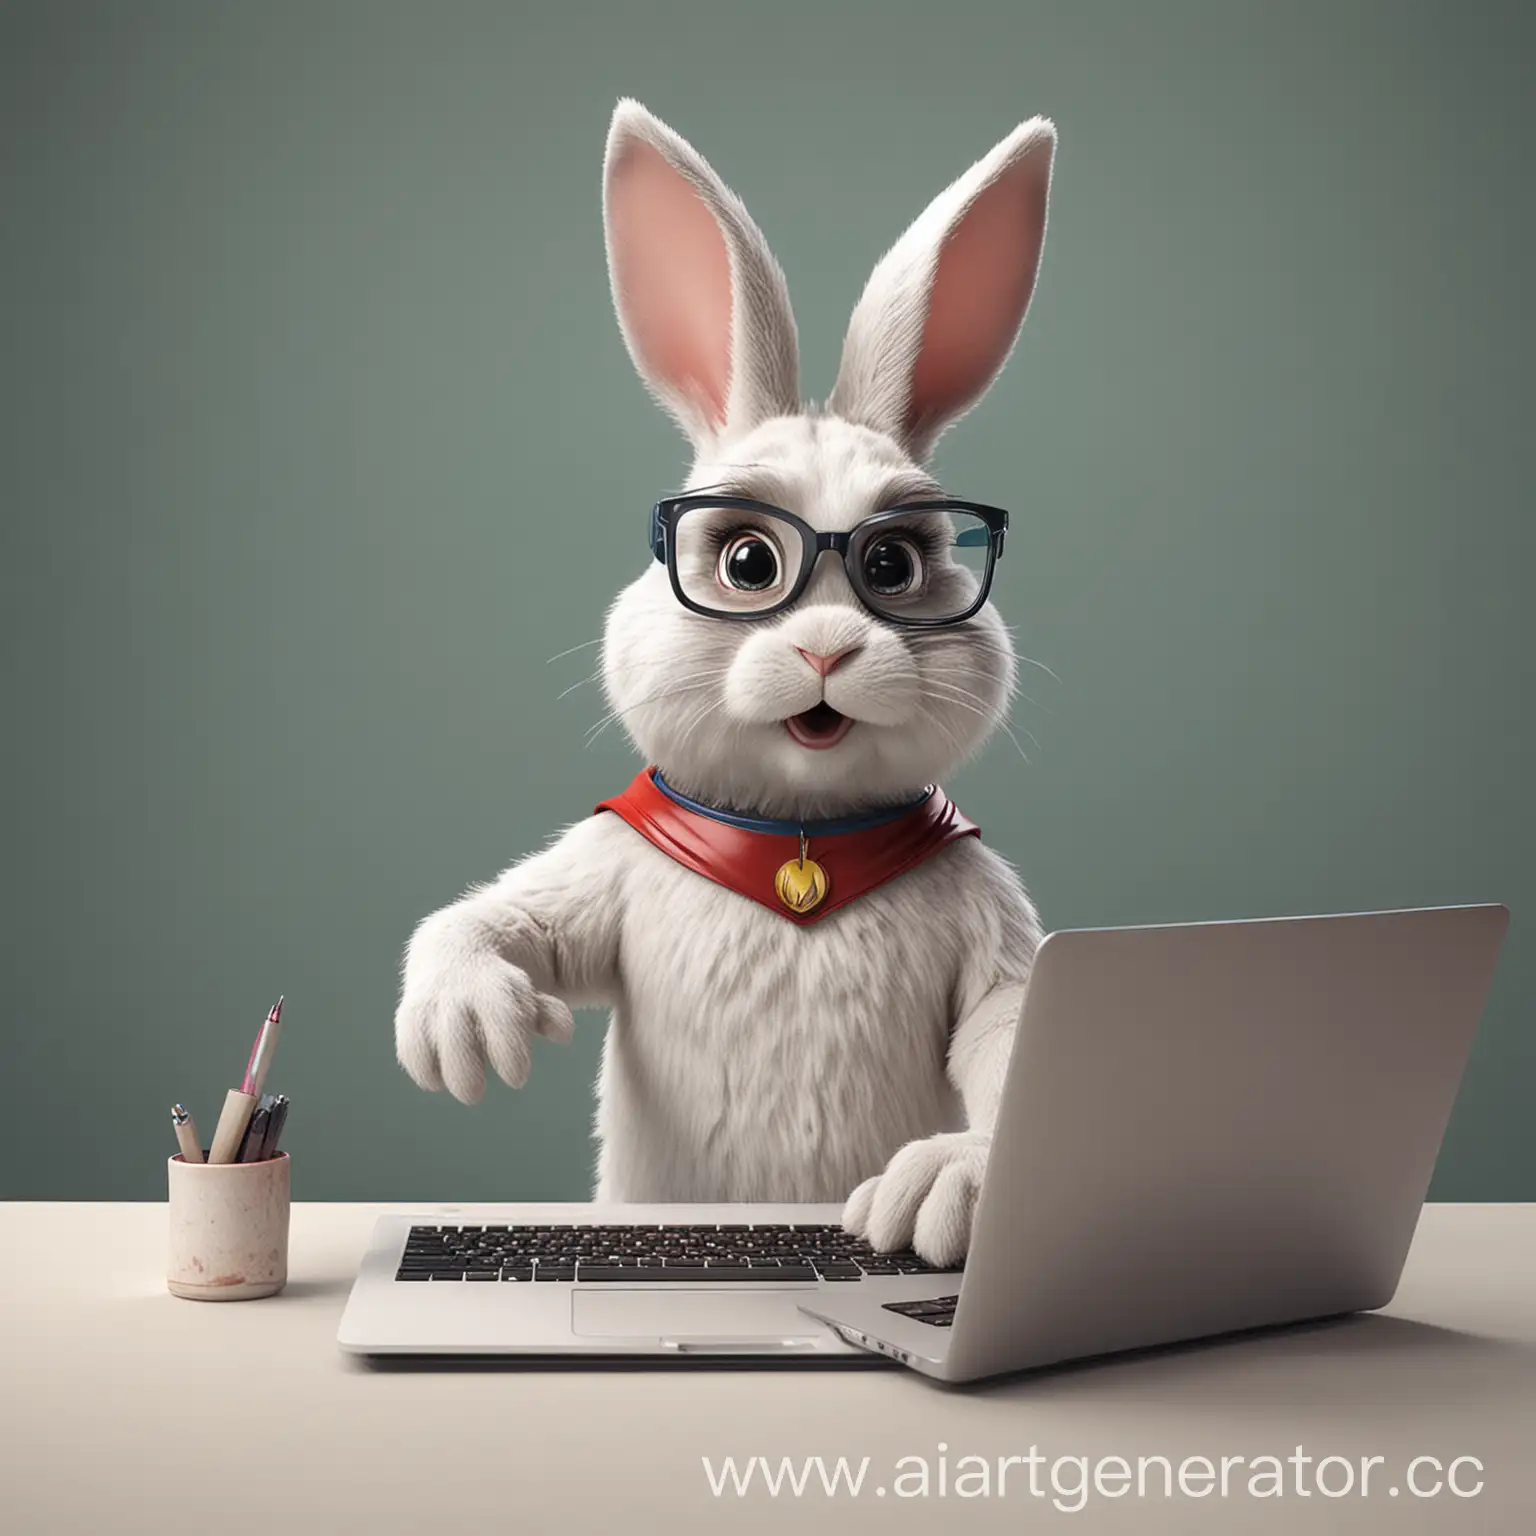 Animated-Bunny-Working-on-Laptop-Superhero-Face